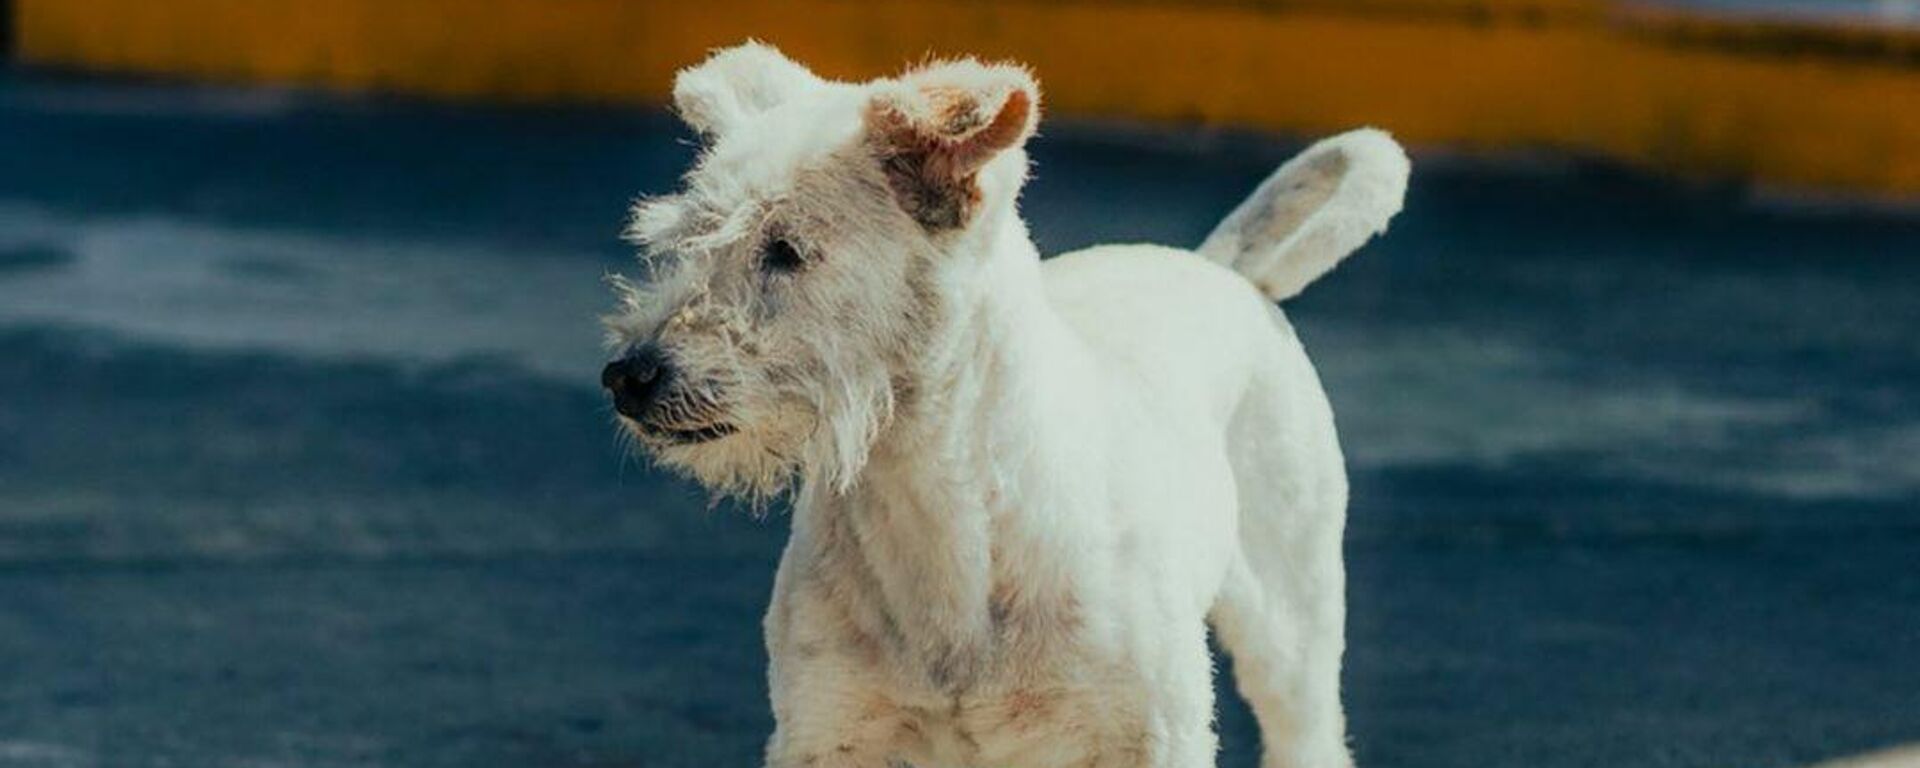 Gasolín, el perro 'influencer' que trabaja en una gasolinera mexicana - Sputnik Mundo, 1920, 09.09.2021